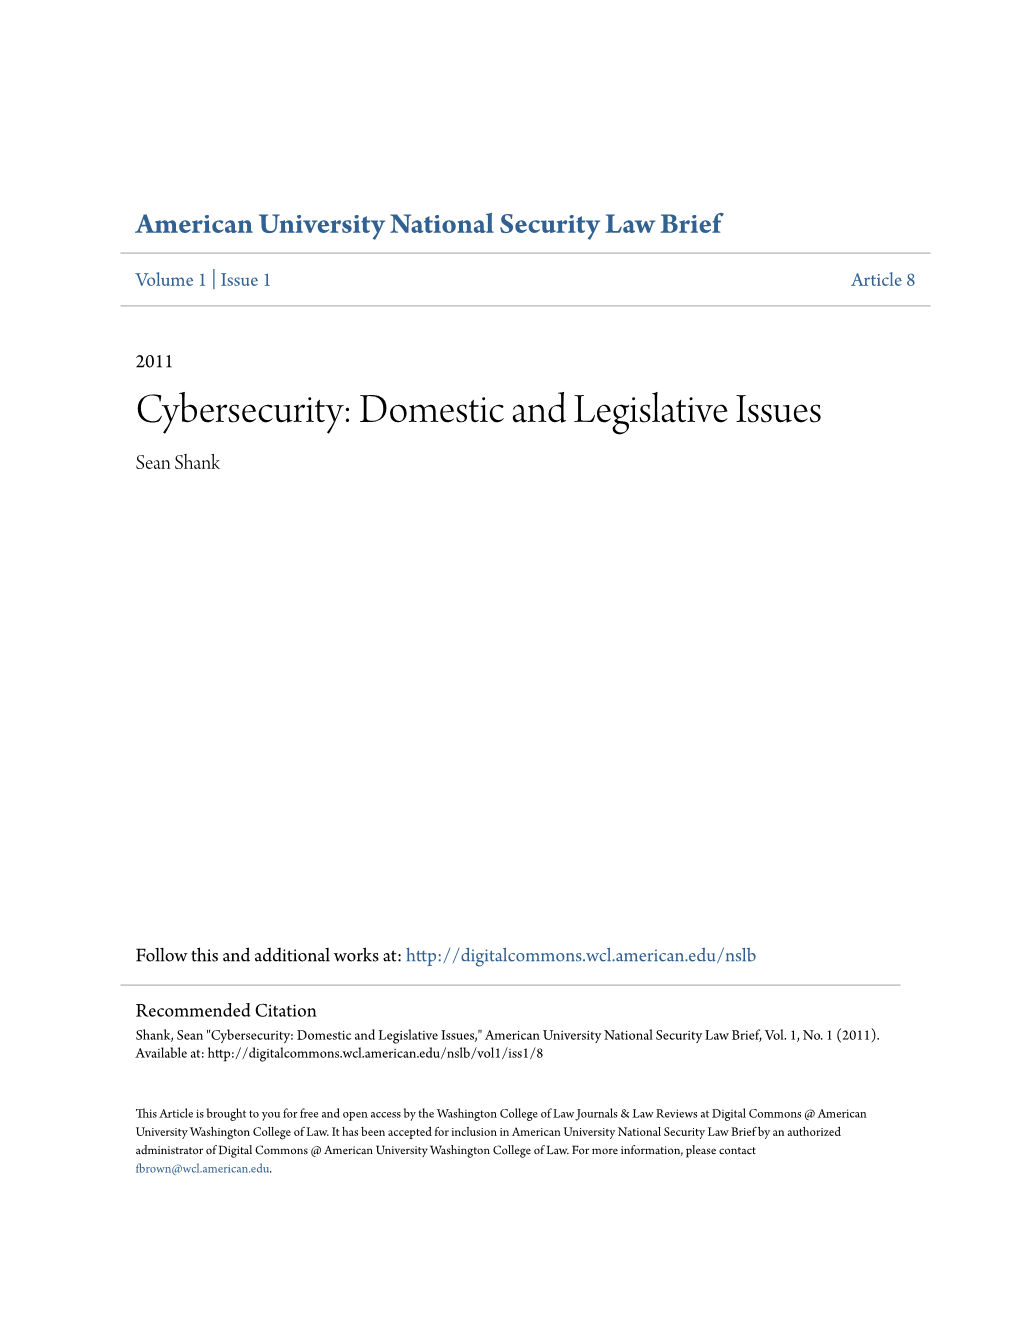 Cybersecurity: Domestic and Legislative Issues Sean Shank